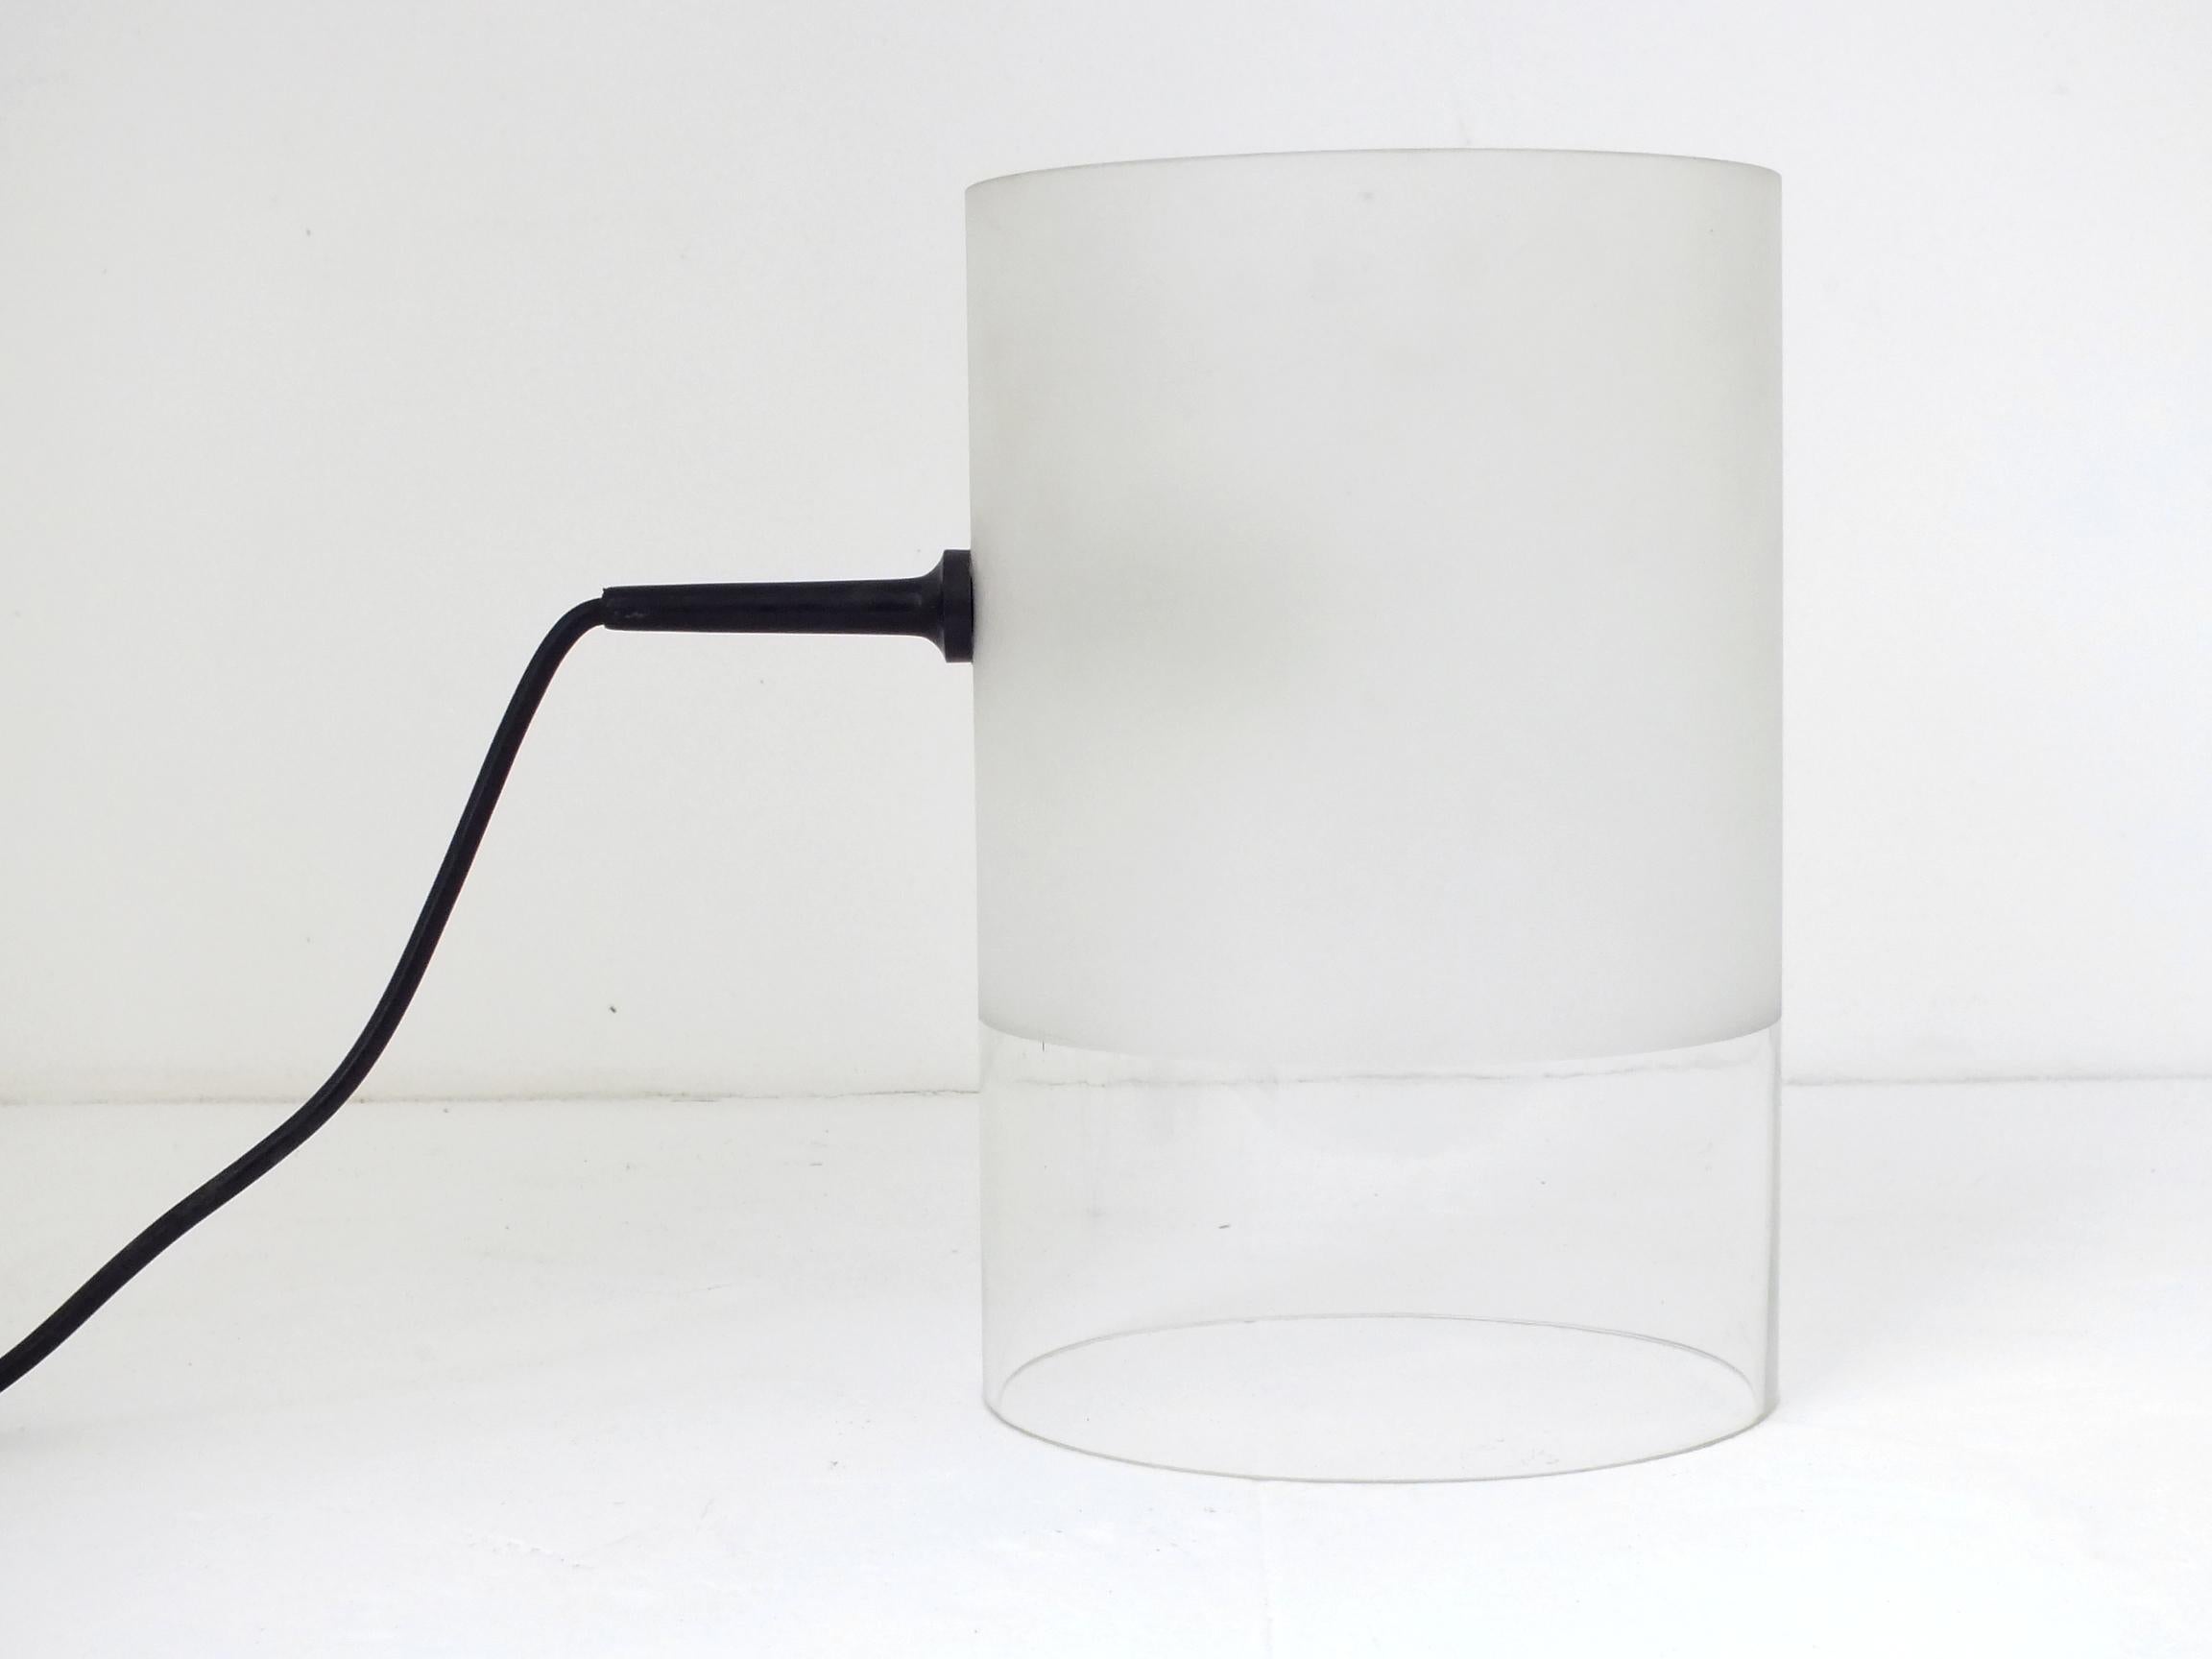 Art Glass Fatua Desk Lamp Fontana Arte Italy Design Guido Rosati Years 70s Space Age Optic For Sale